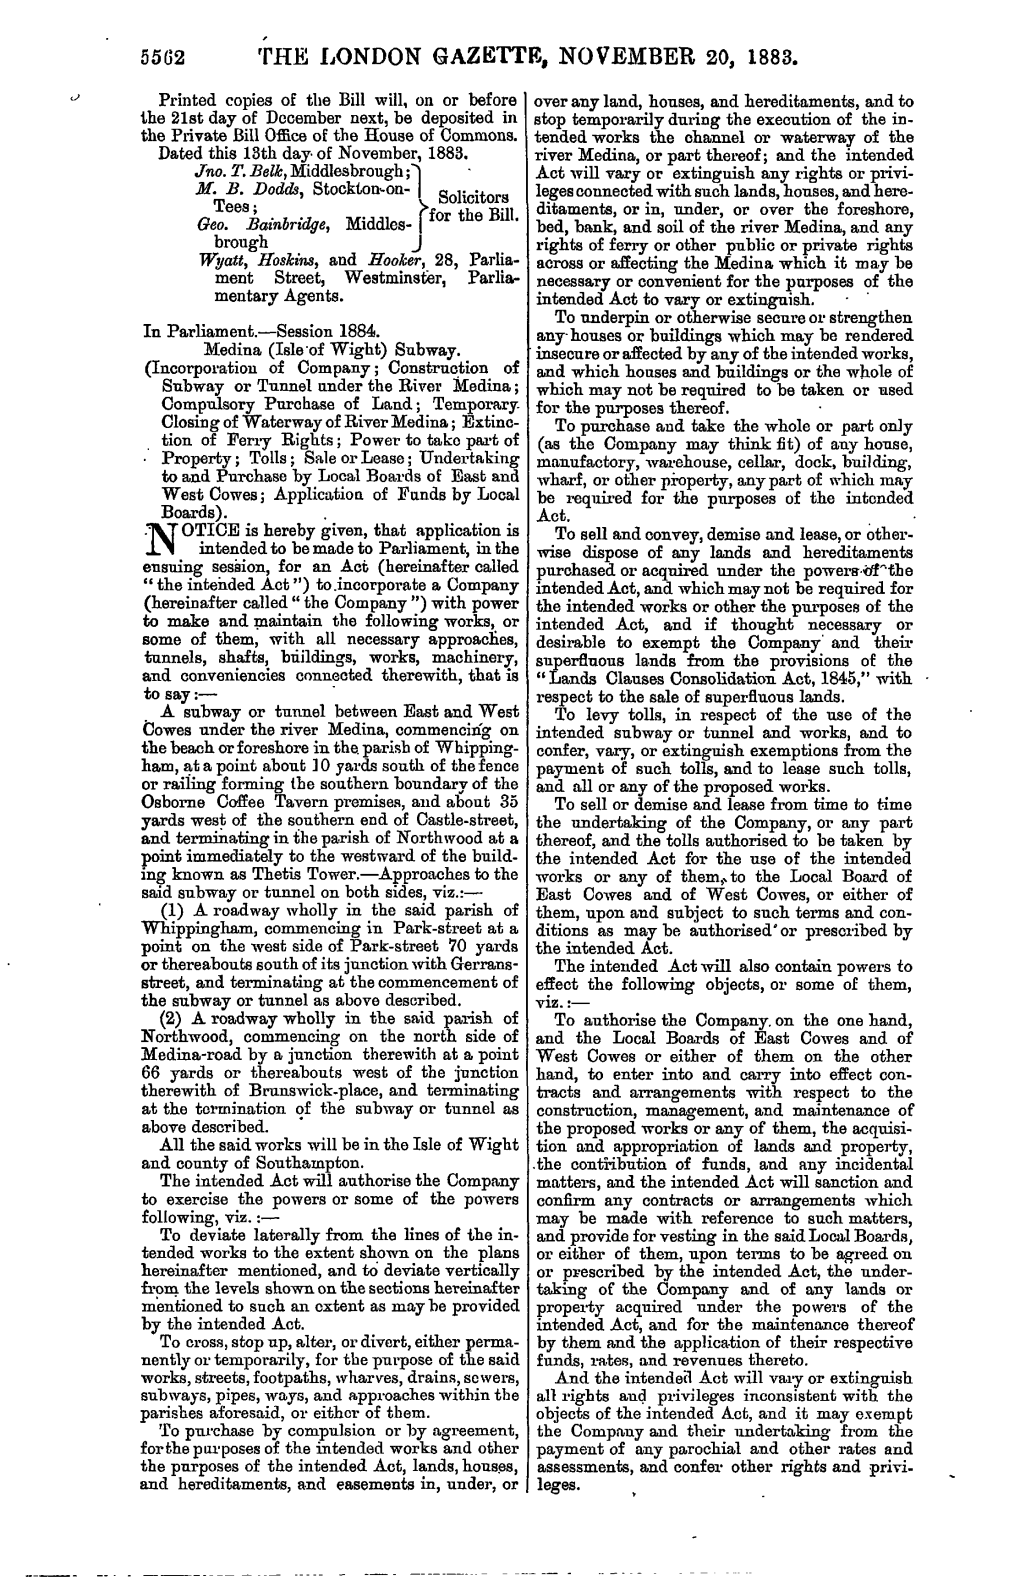 The London Gazette, November 20, 1883